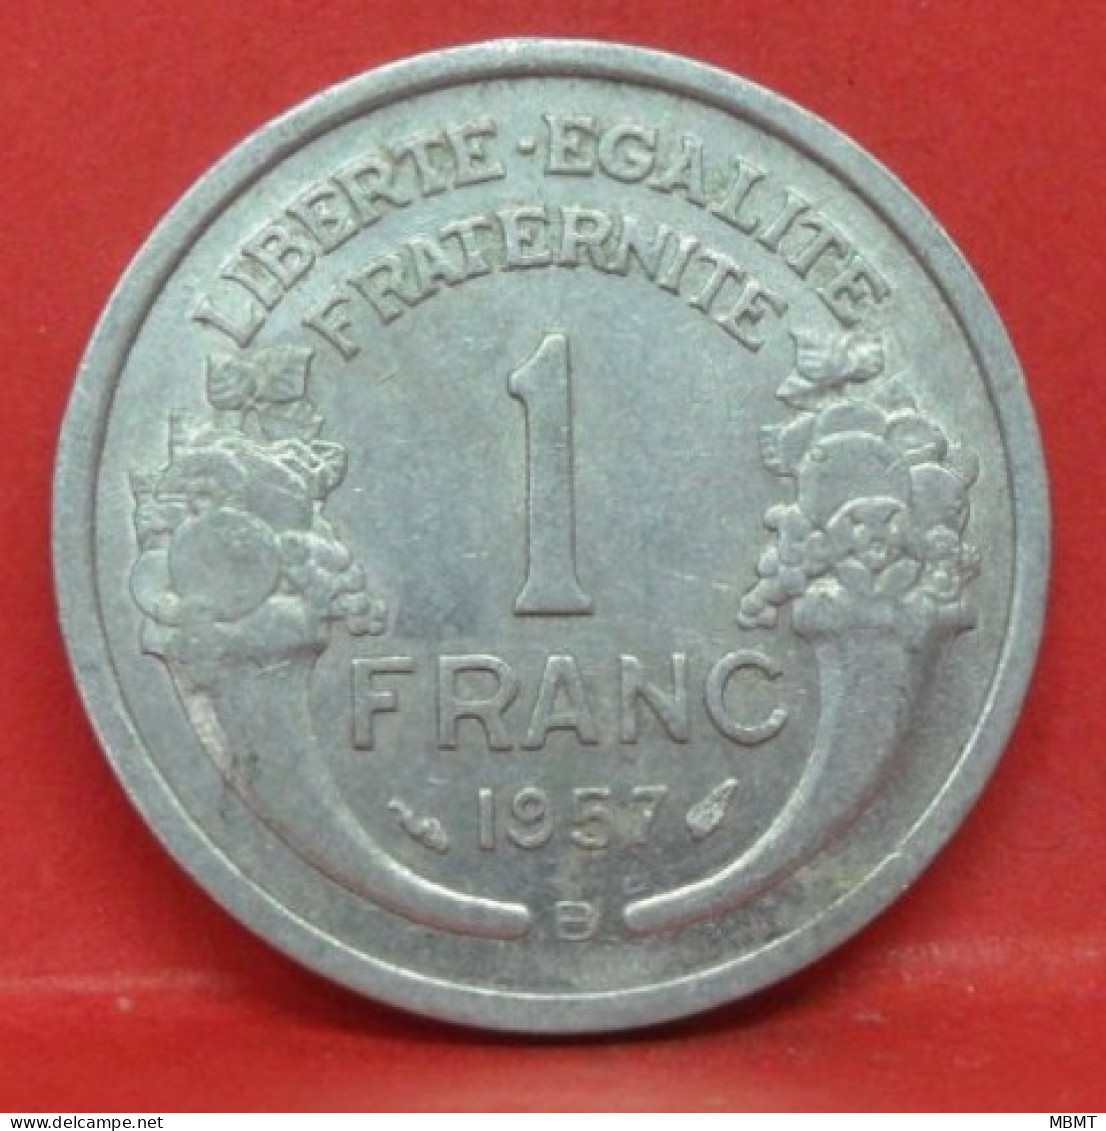 1 Franc Morlon Alu 1957 B - TTB - Pièce Monnaie France - Article N°684 - 1 Franc